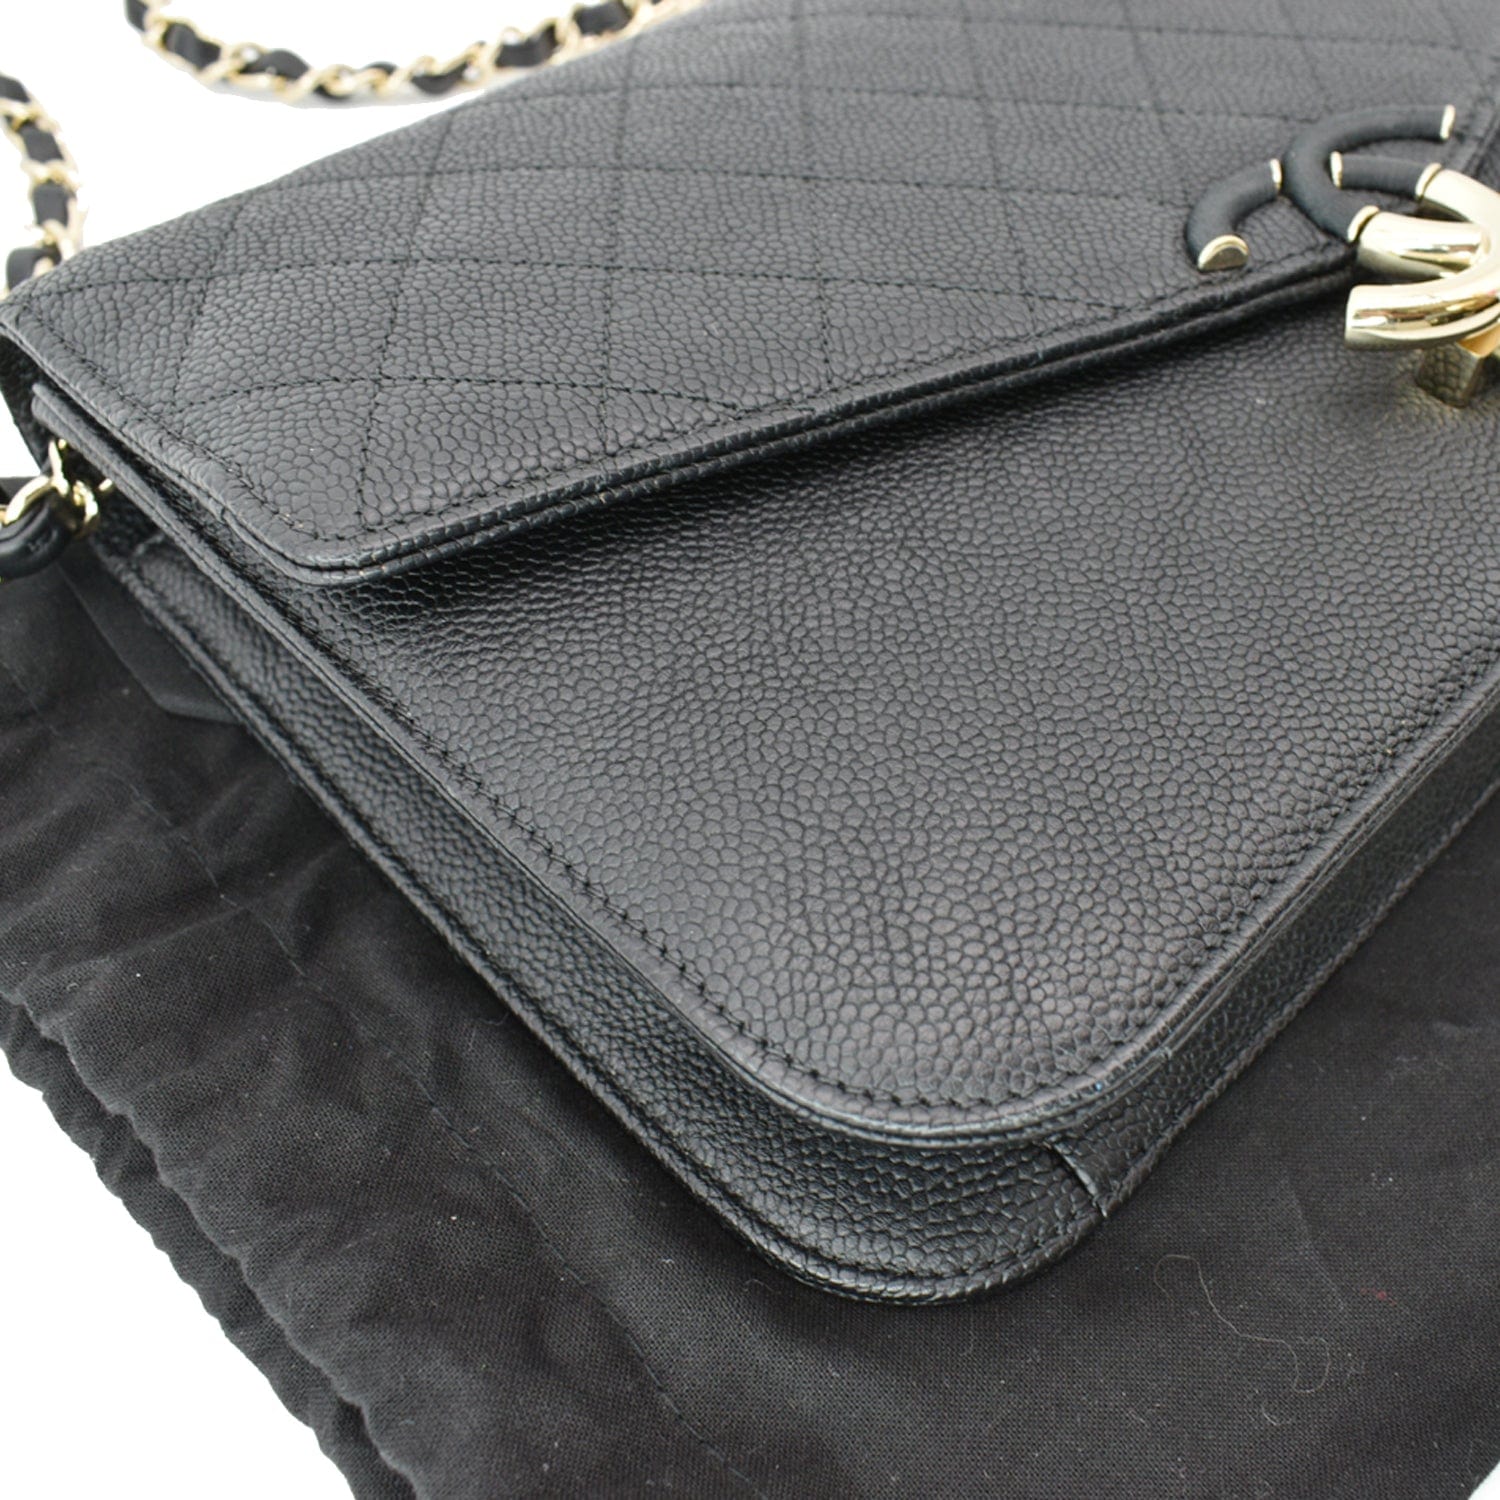 CHANEL - Chain Around Mini Crossbody / Clutch - Black / Silver Leather Bag